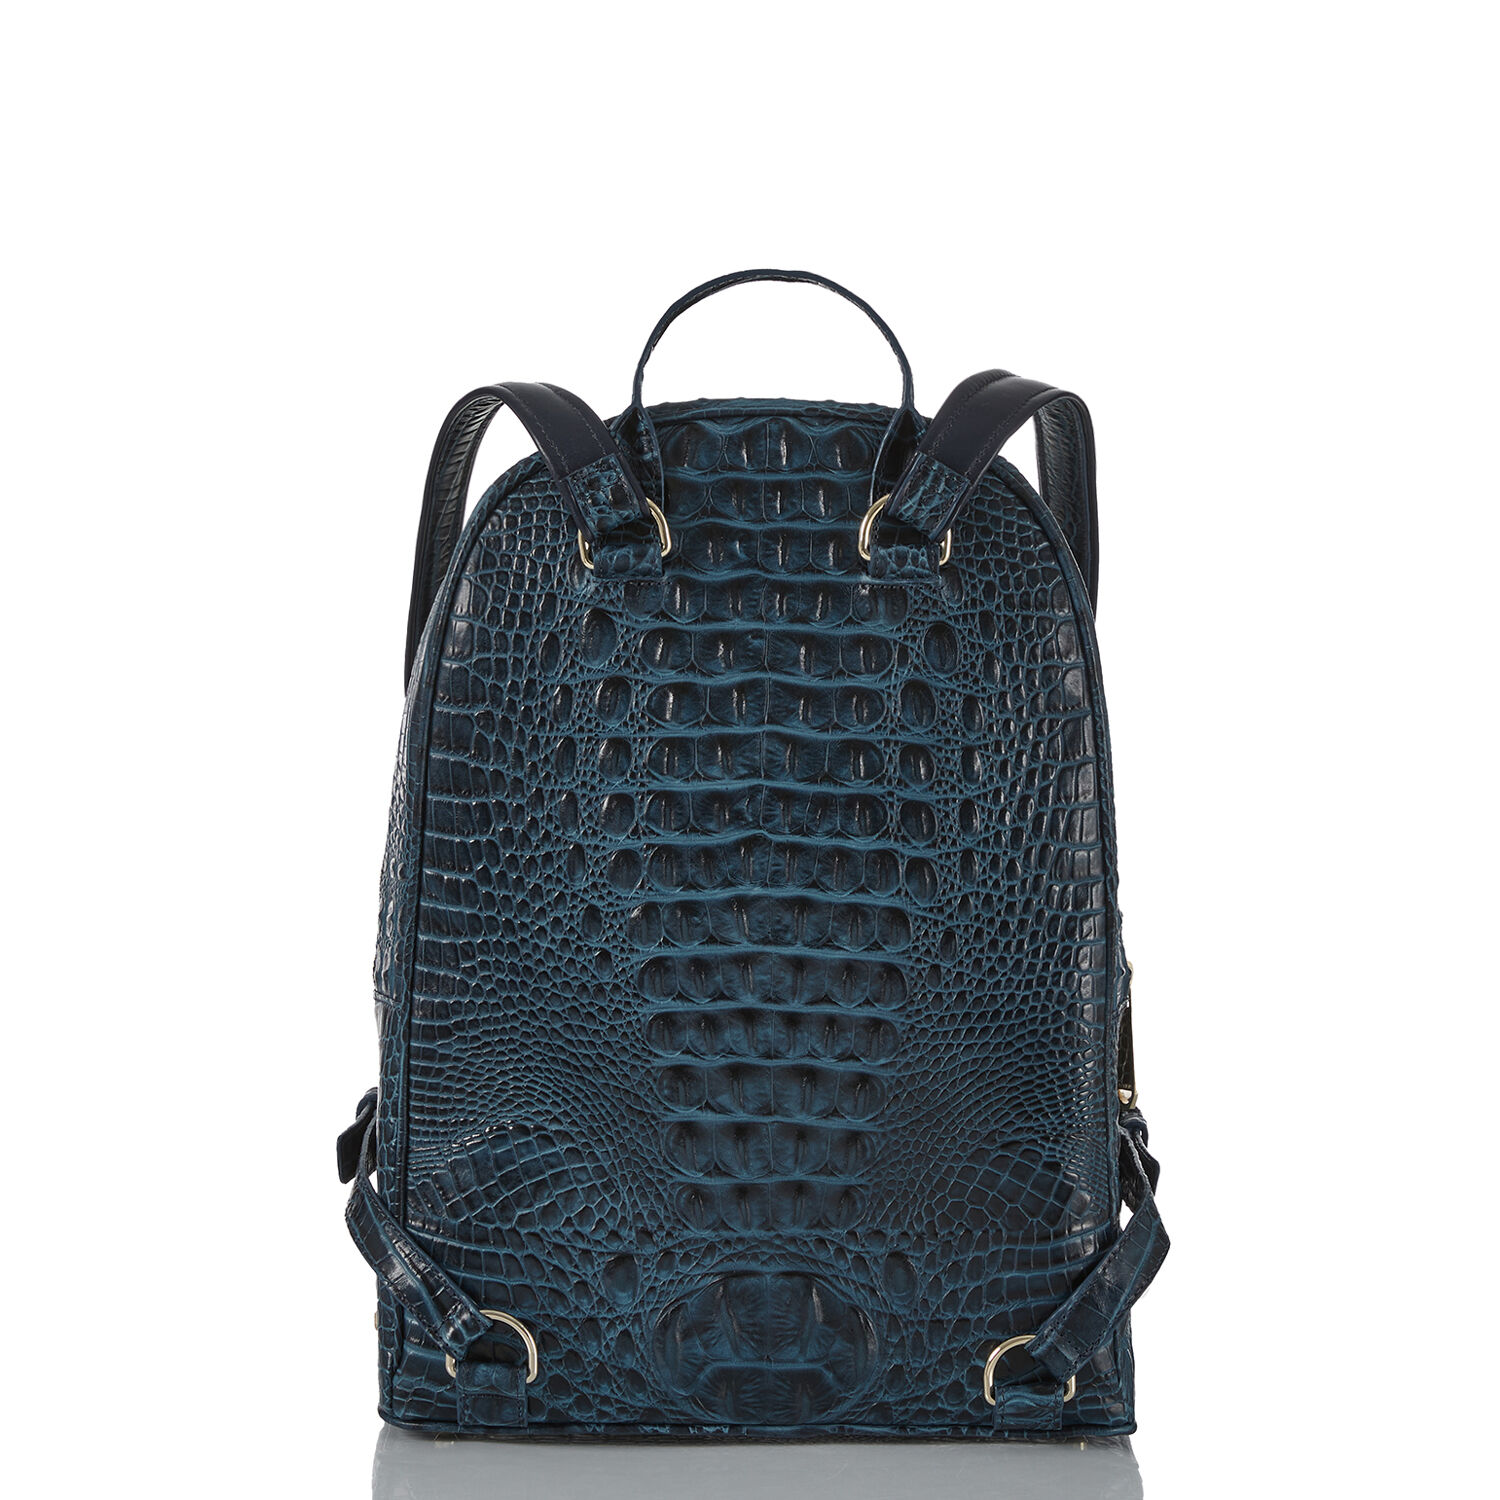 Convertible Backpack Purse - Paw Print - The Handbag Store